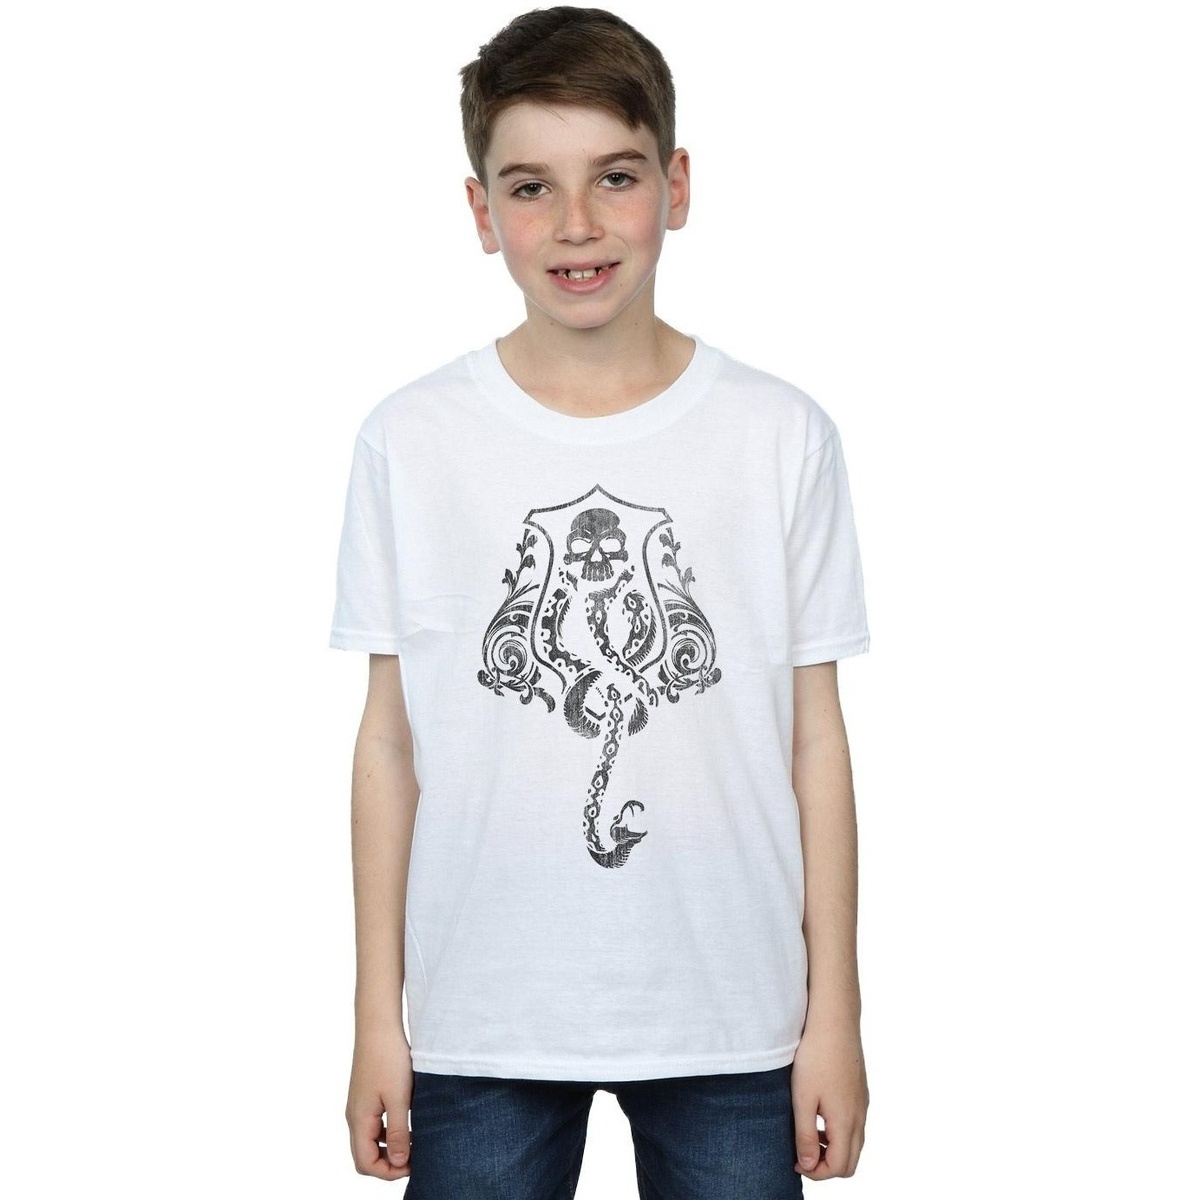 Vêtements Garçon T-shirts manches courtes Harry Potter Dark Mark Crest Blanc